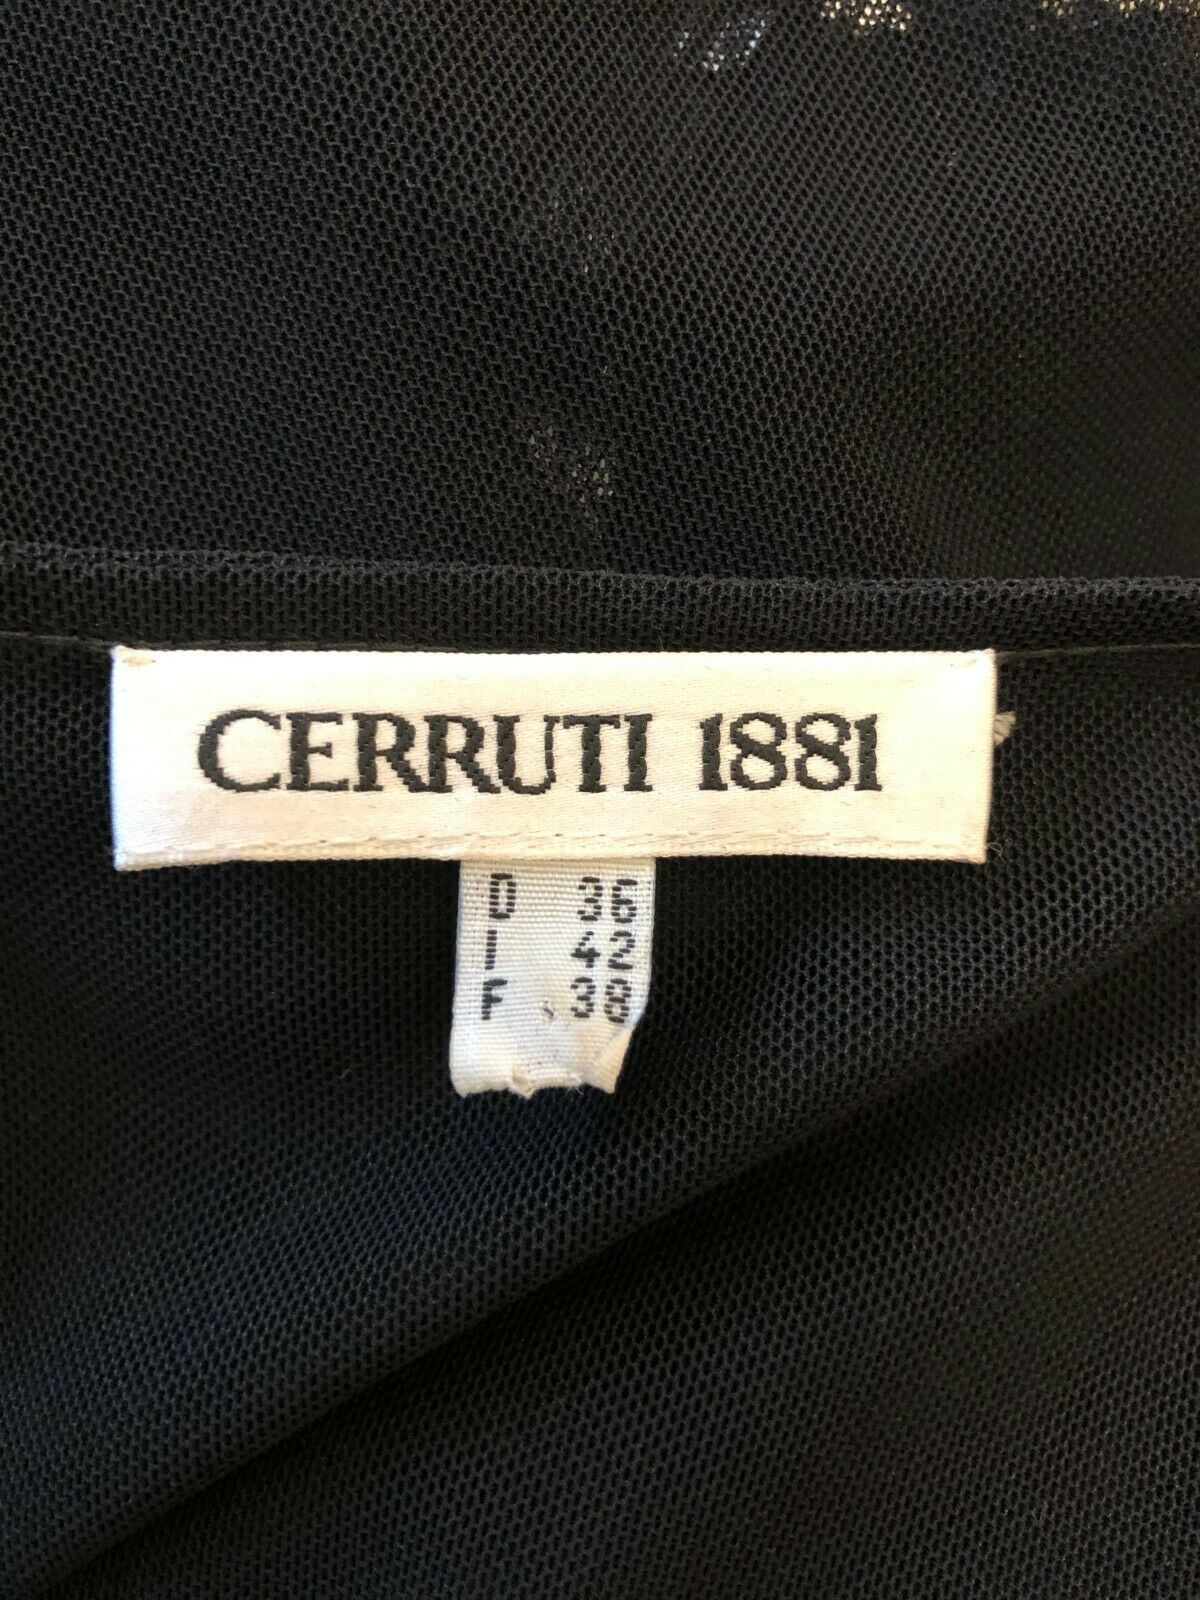 Cerruti 1881 Black Sequin Sleeveless Evening Top IT 42 UK 10 US 6 EU 38 Timeless Fashions